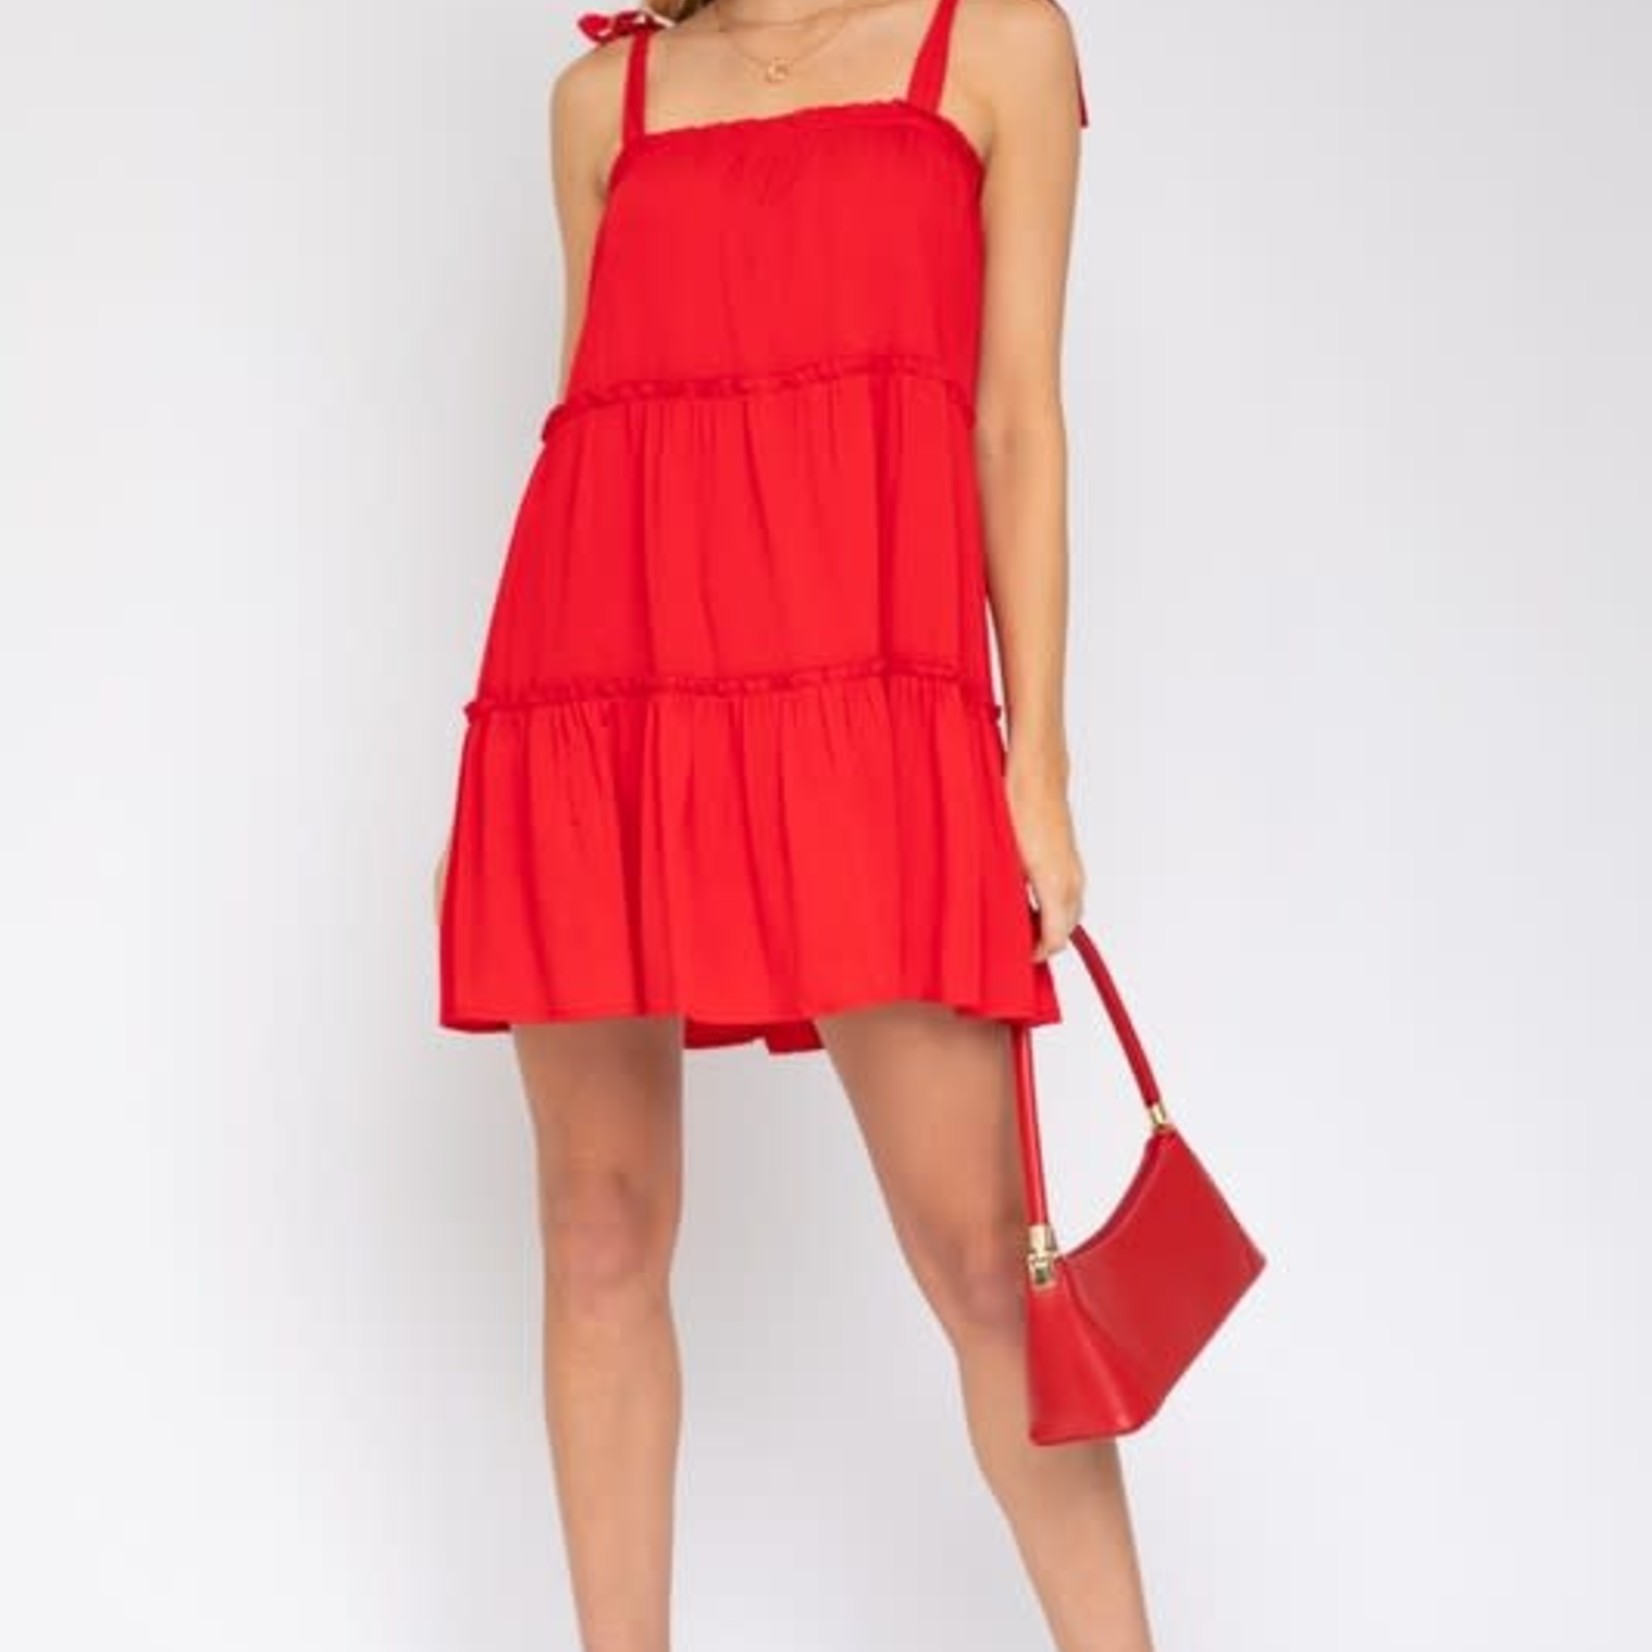 Gilli Red Frills Swing Dress